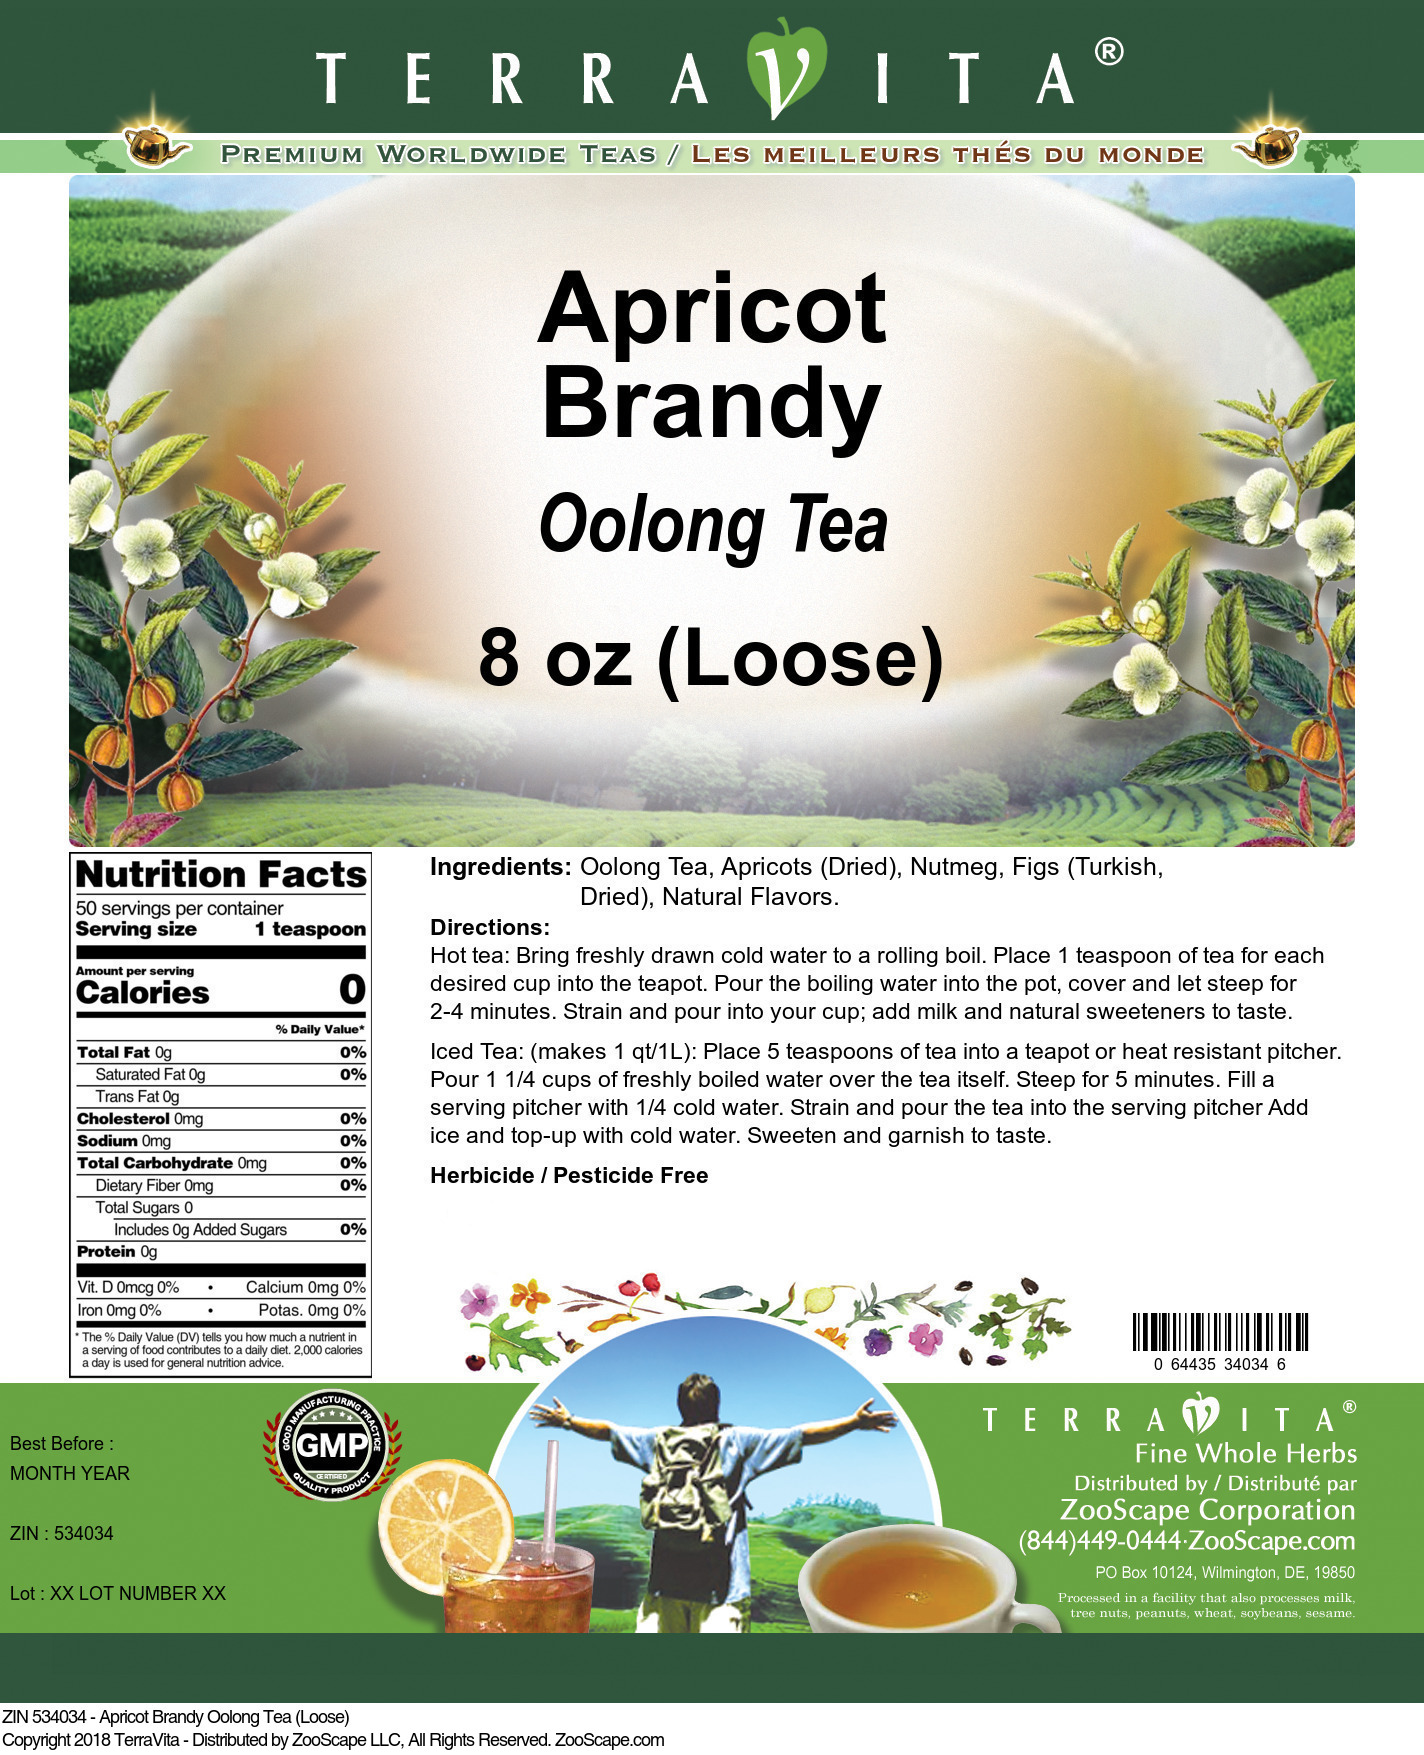 Apricot Brandy Oolong Tea (Loose) - Label